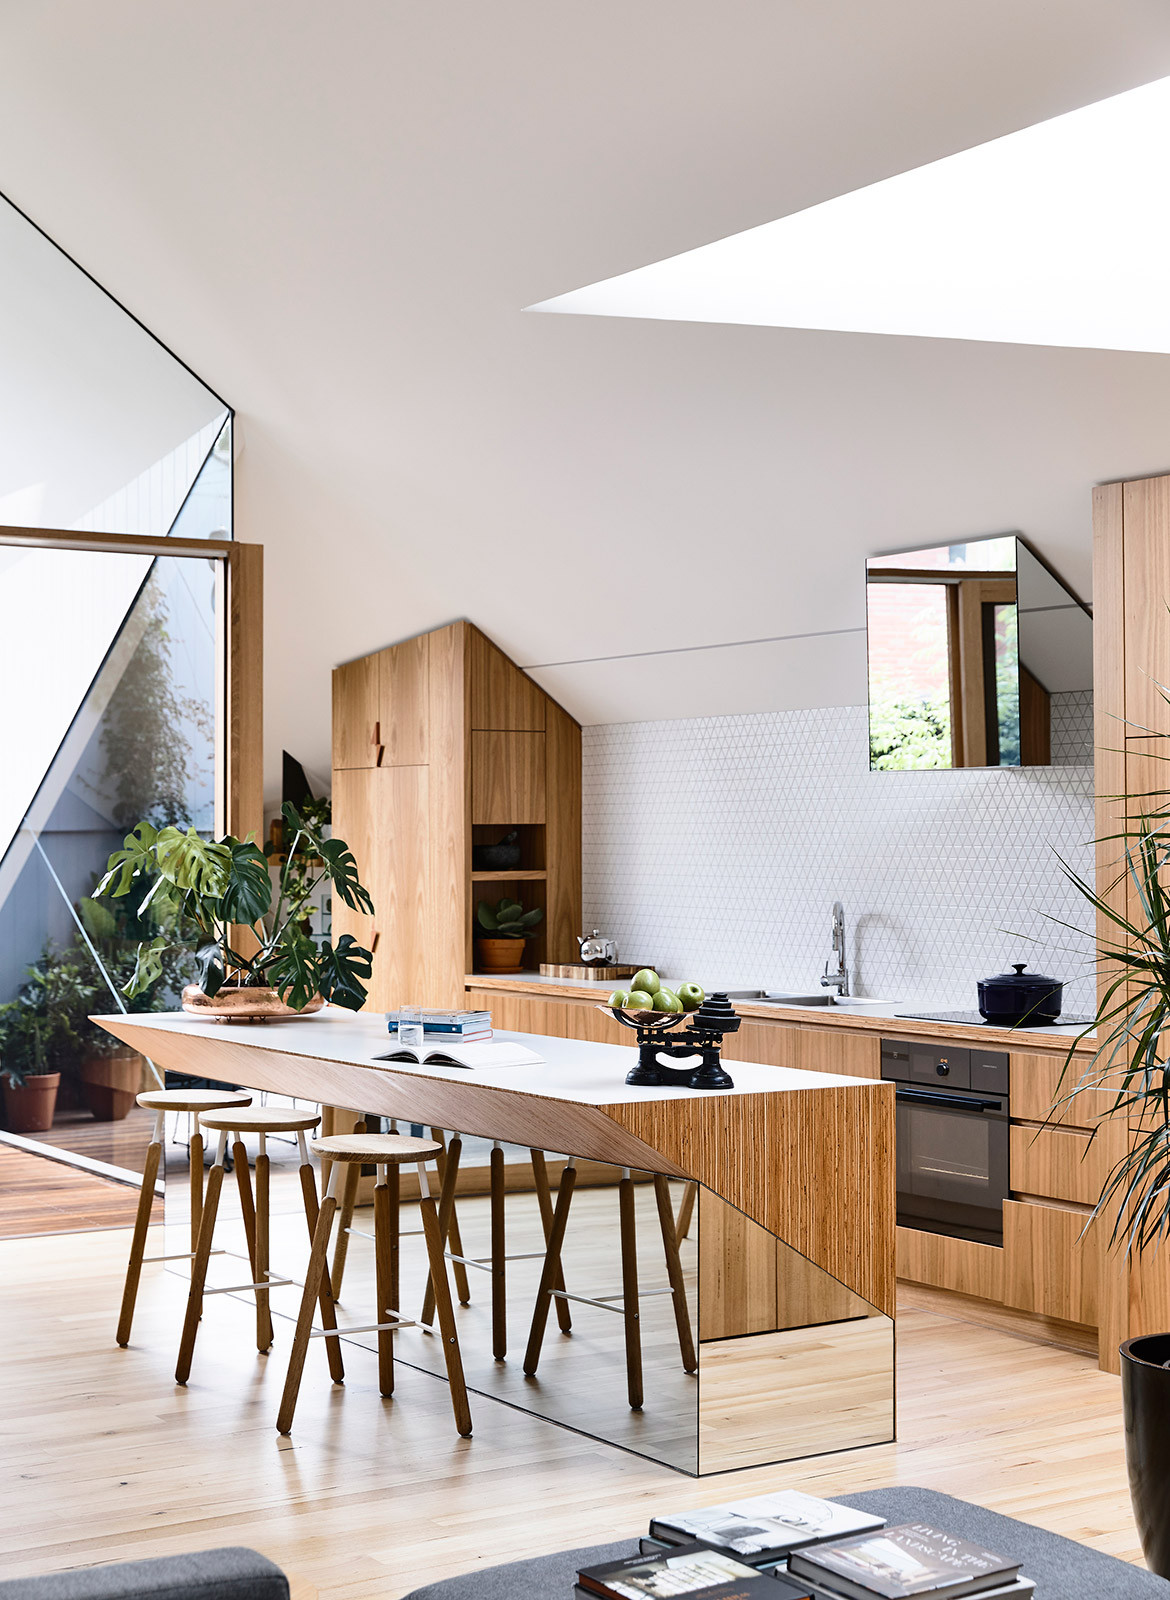 His & Hers House FMD Architects CC Derek Swalwell kitchen island bench